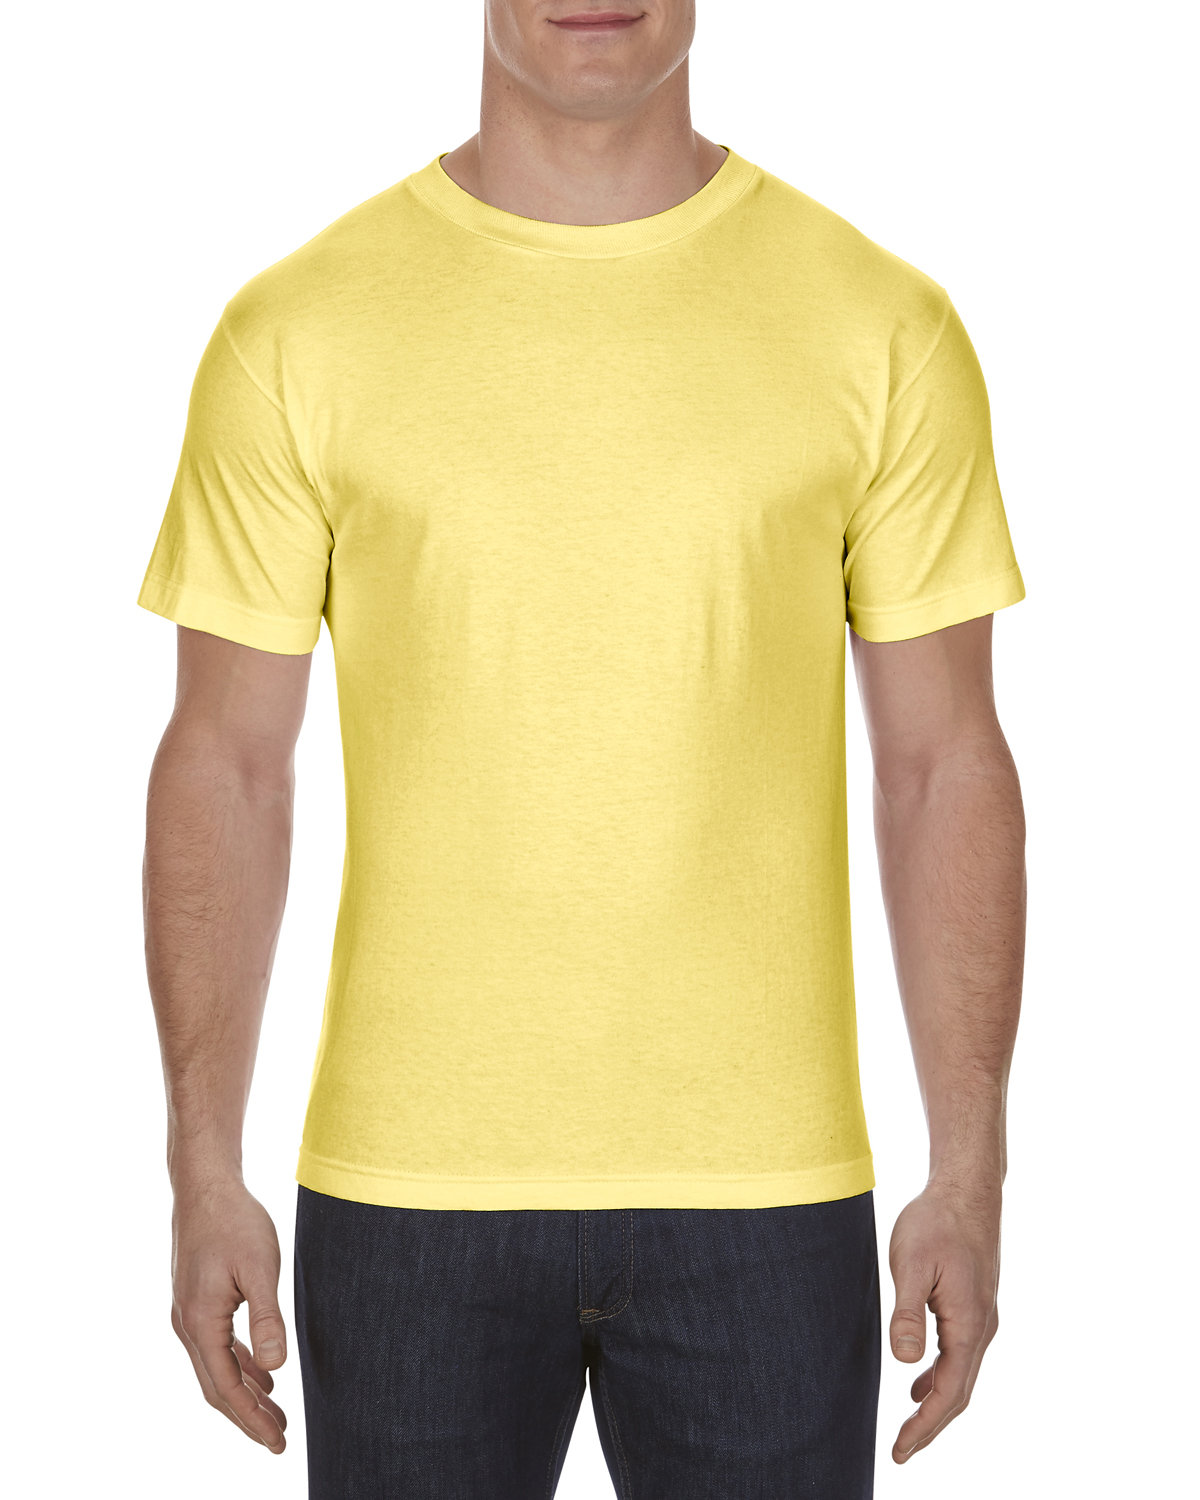 American Apparel Adult 6.0 oz., 100% Cotton T-Shirt BANANA 